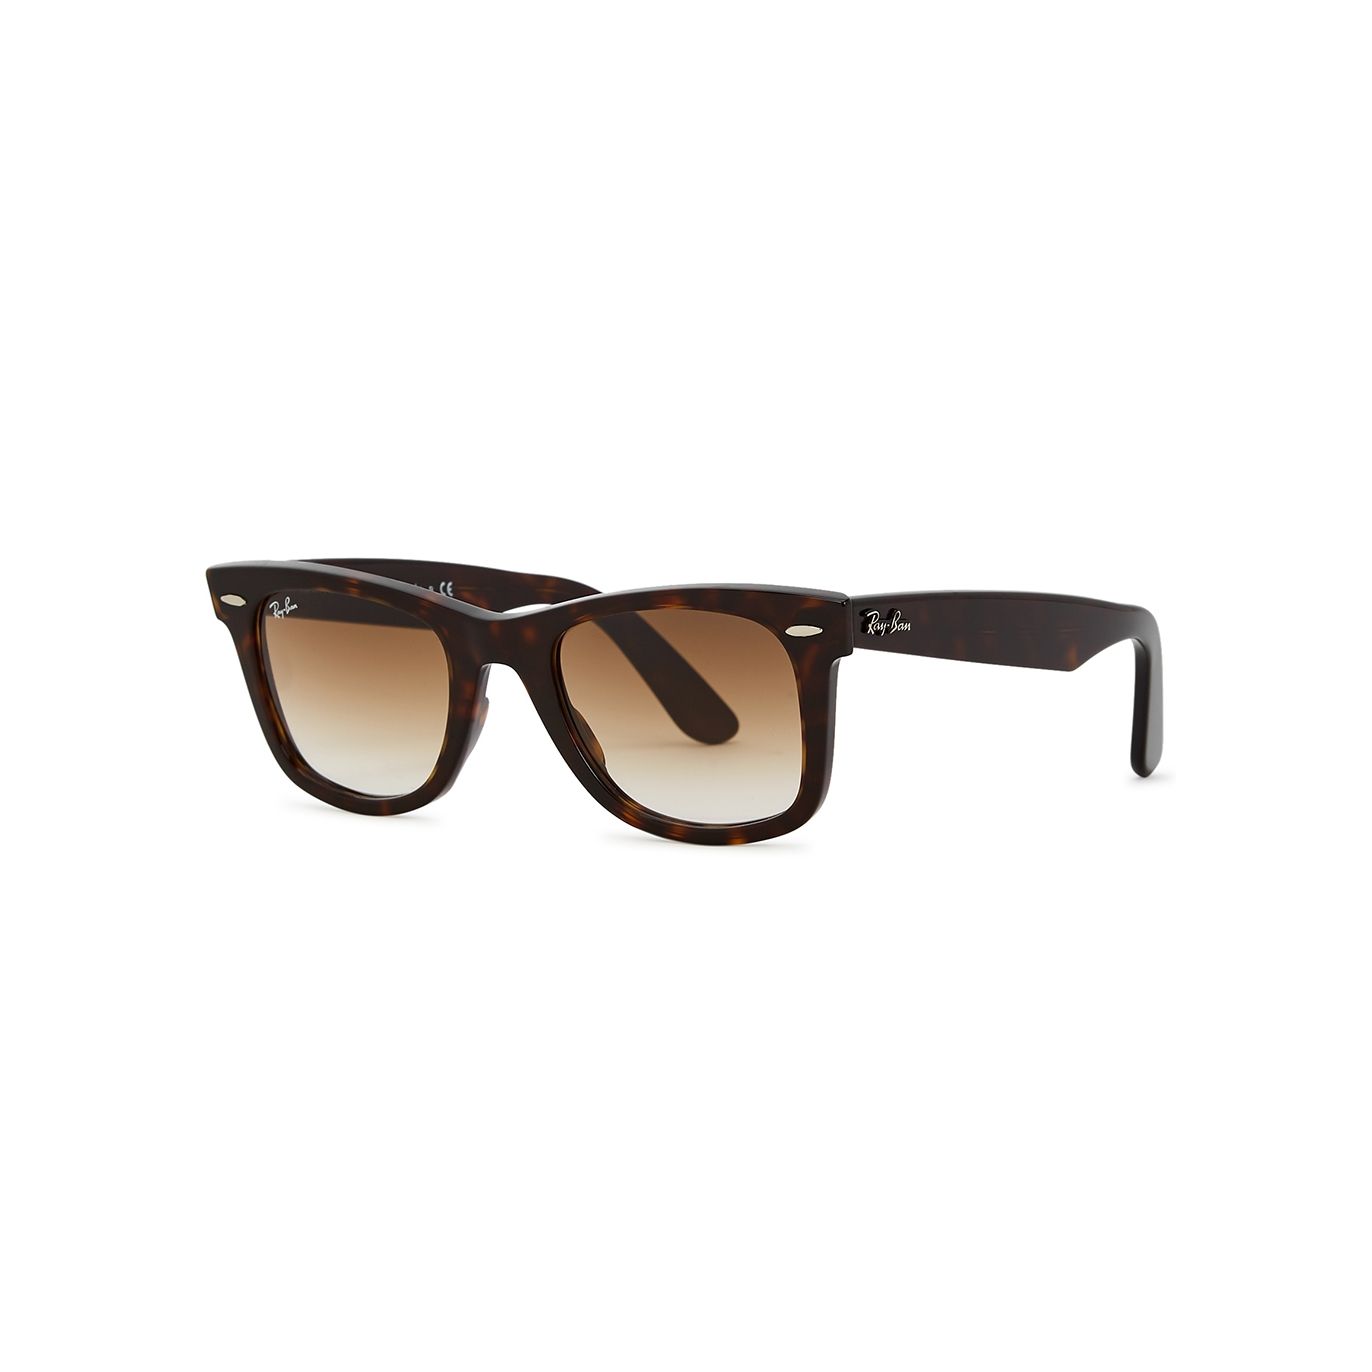 Ray-Ban Tortoiseshell Wayfarer Sunglasses, Sunglasses, Brown Lenses